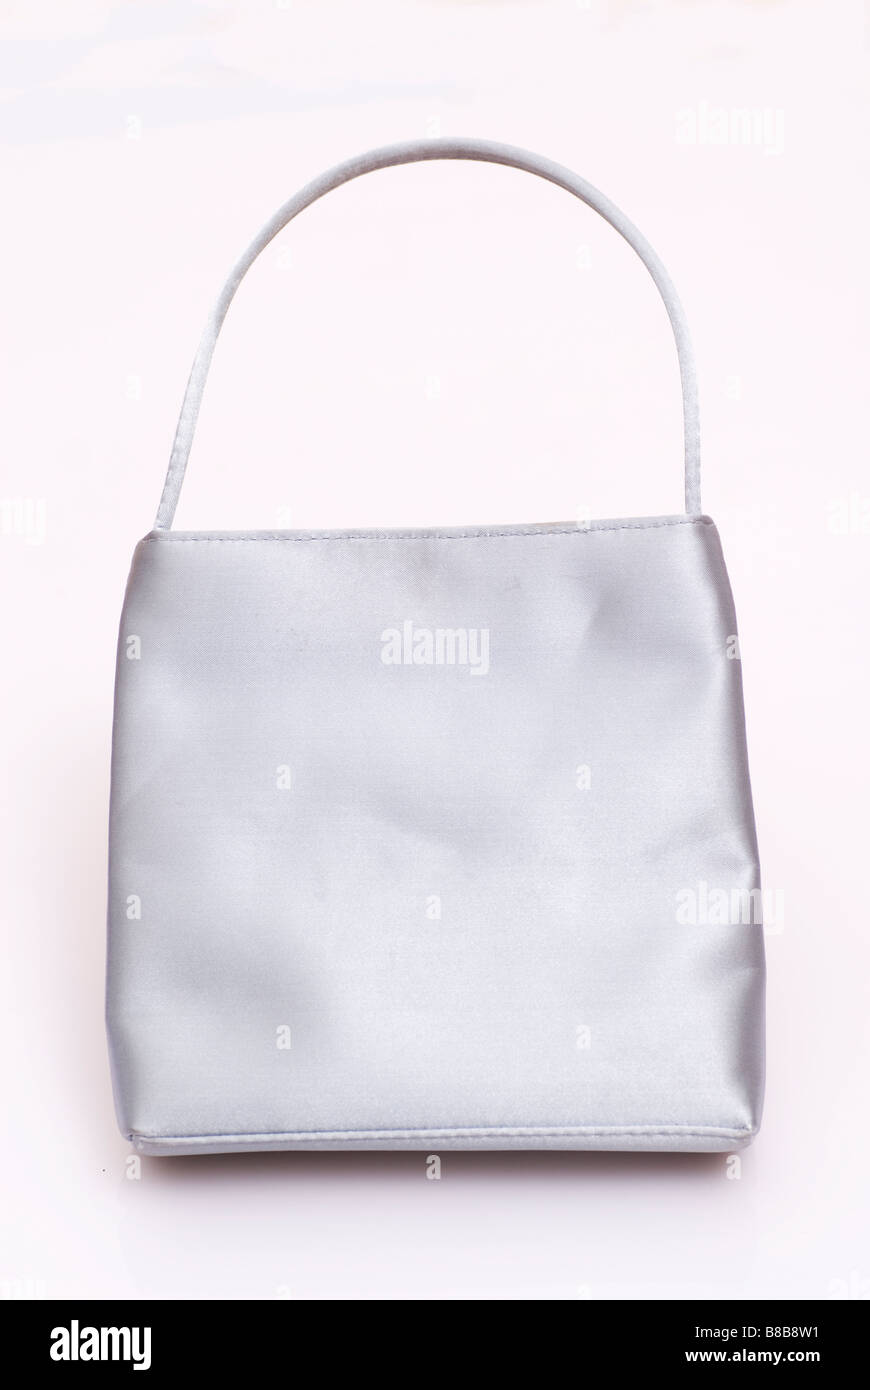 Silver woman's handbag purse Stock Photo